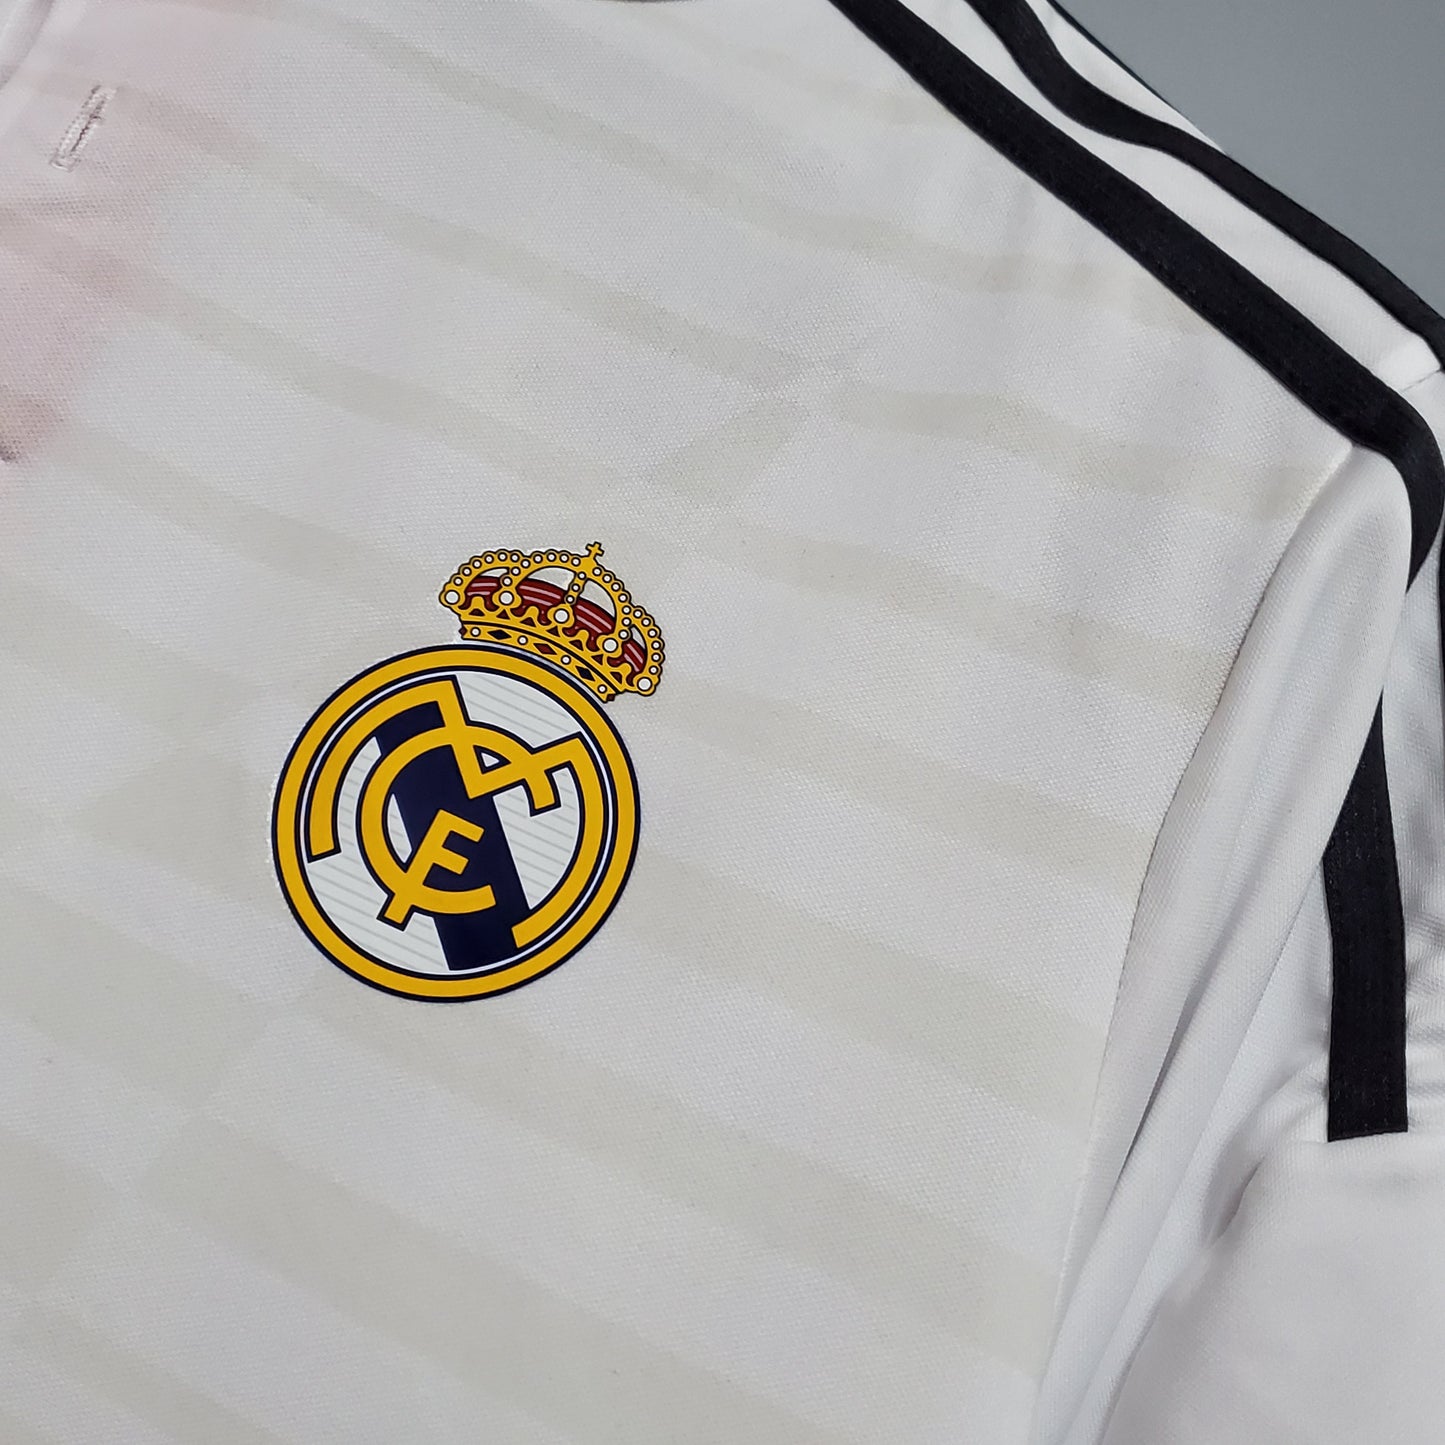 Real Madrid 14-15 Home Shirt